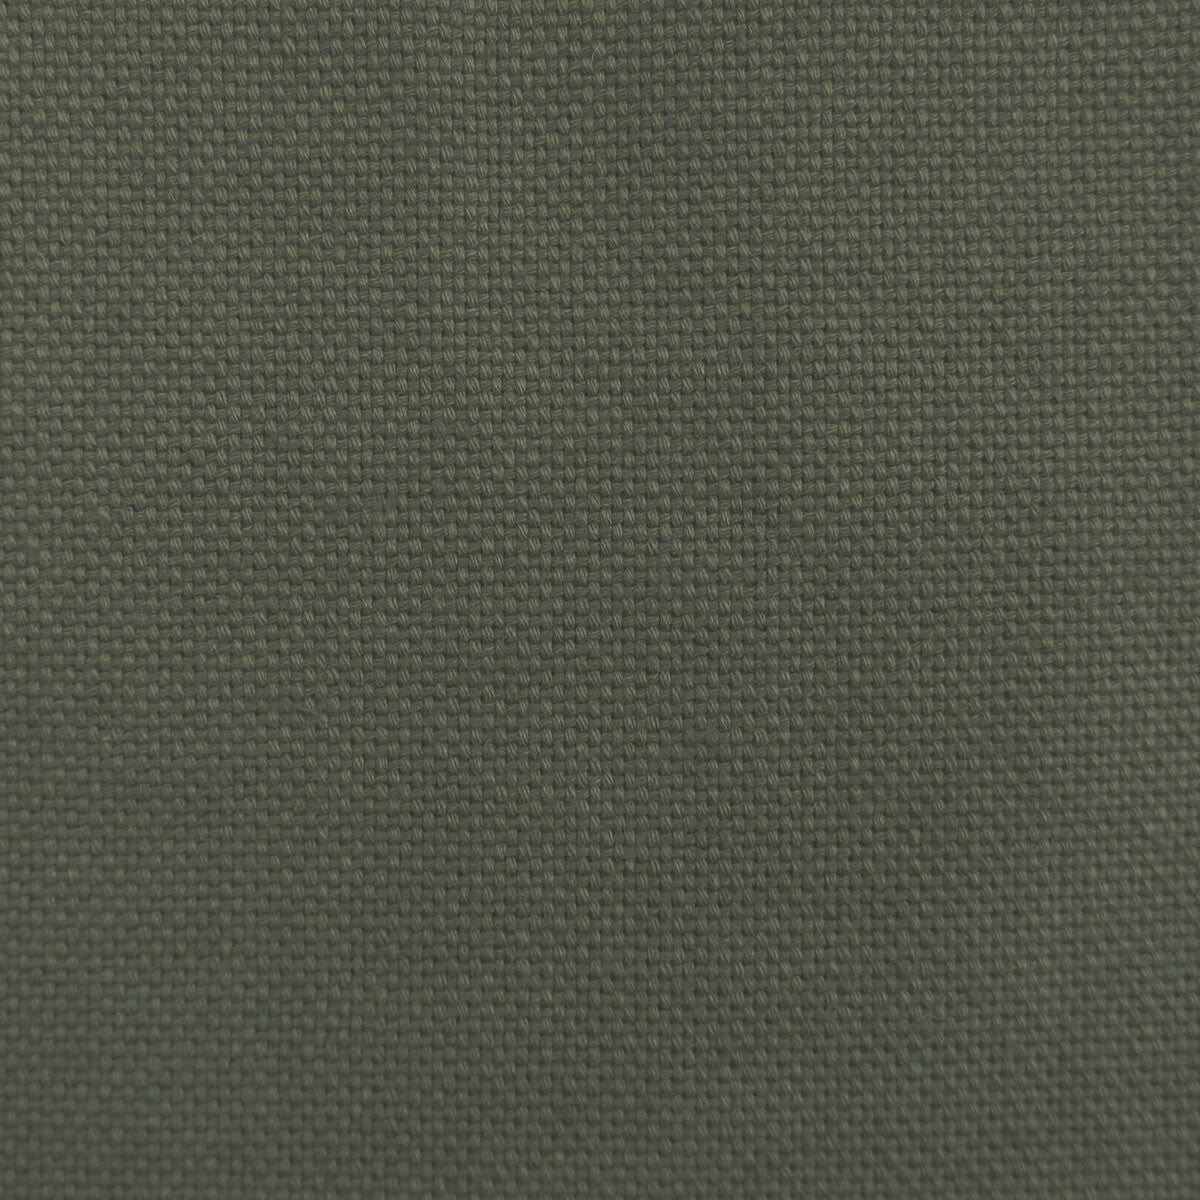 Dobra fabric in verde claro color - pattern LCT1075.027.0 - by Gaston y Daniela in the Lorenzo Castillo VII The Rectory collection